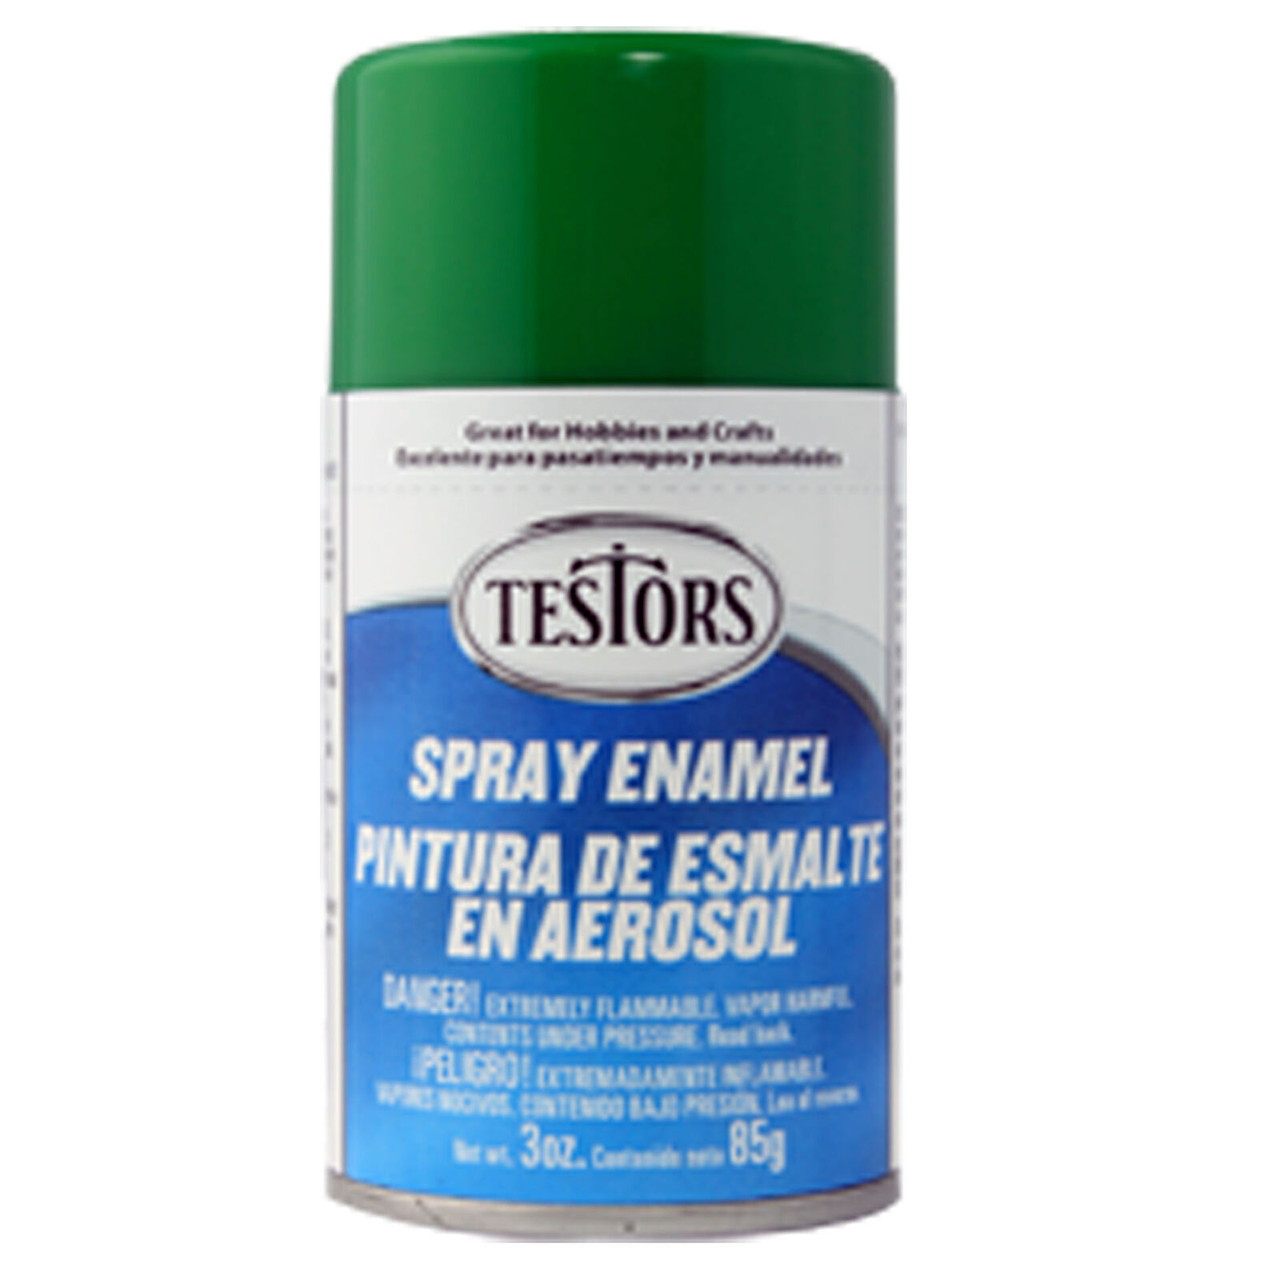 Testors Green Enamel Spray Paint 3oz